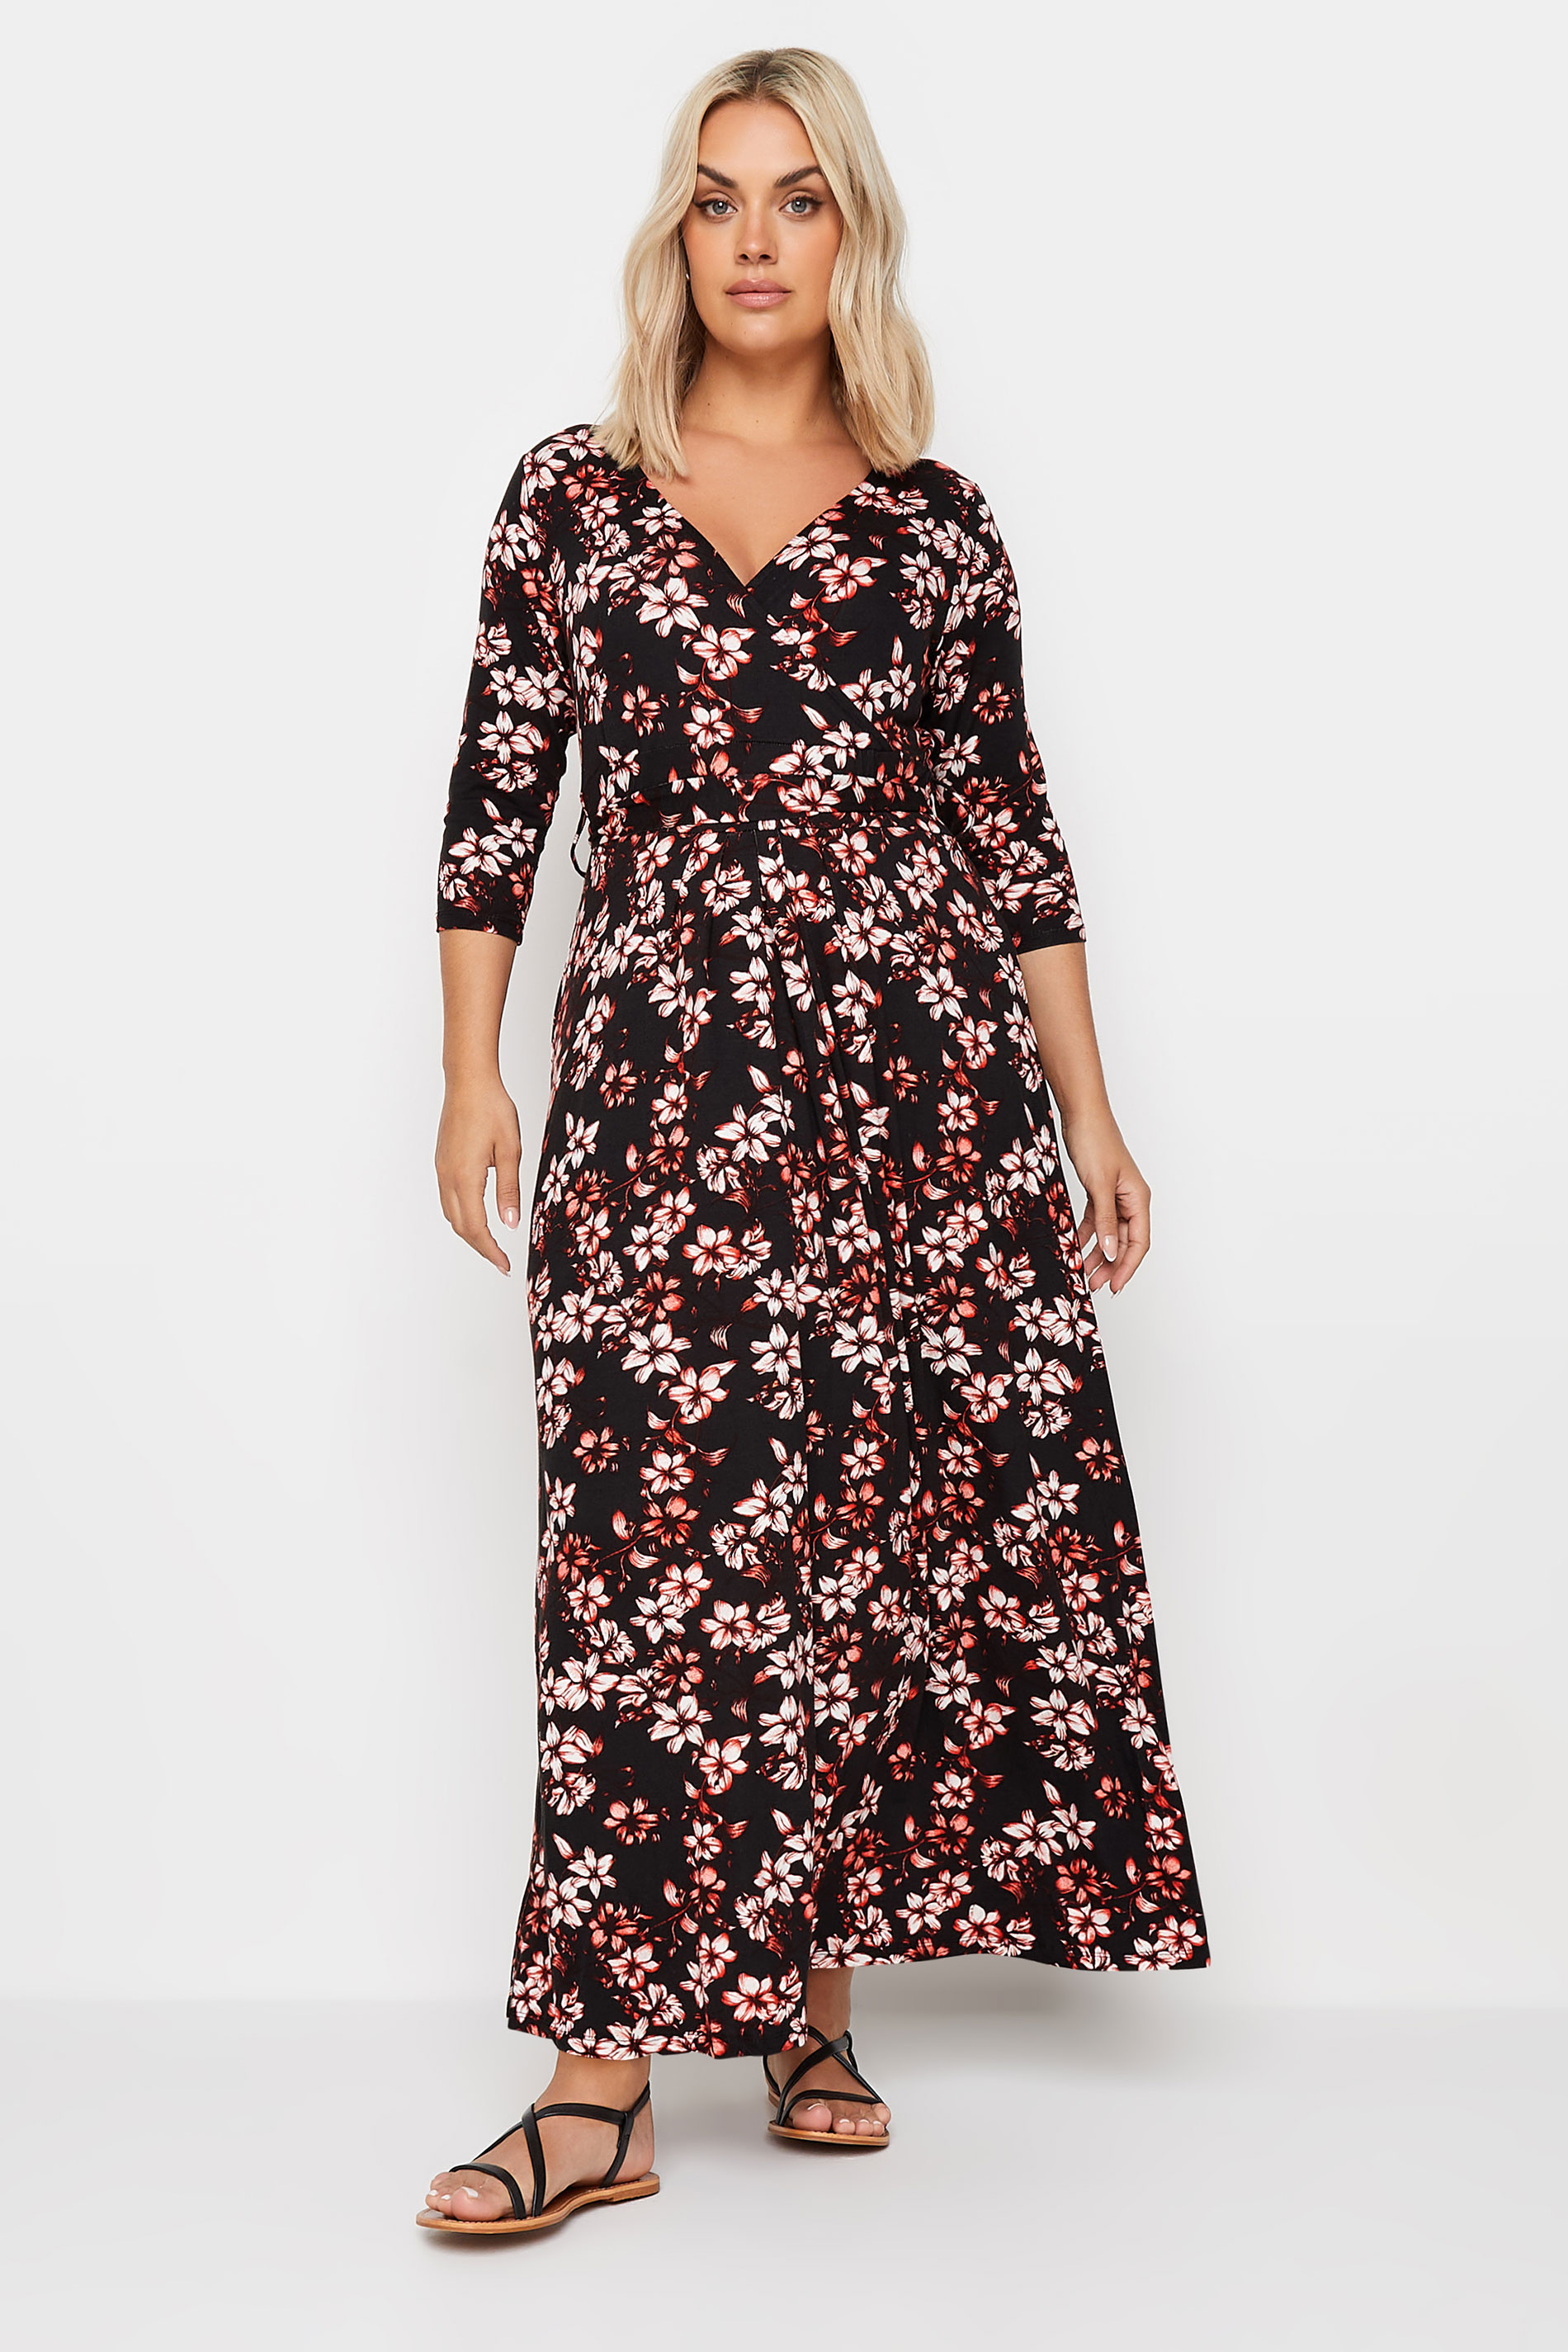 YOURS Plus Size Black Floral Print Maxi Wrap Dress | Yours Clothing 2